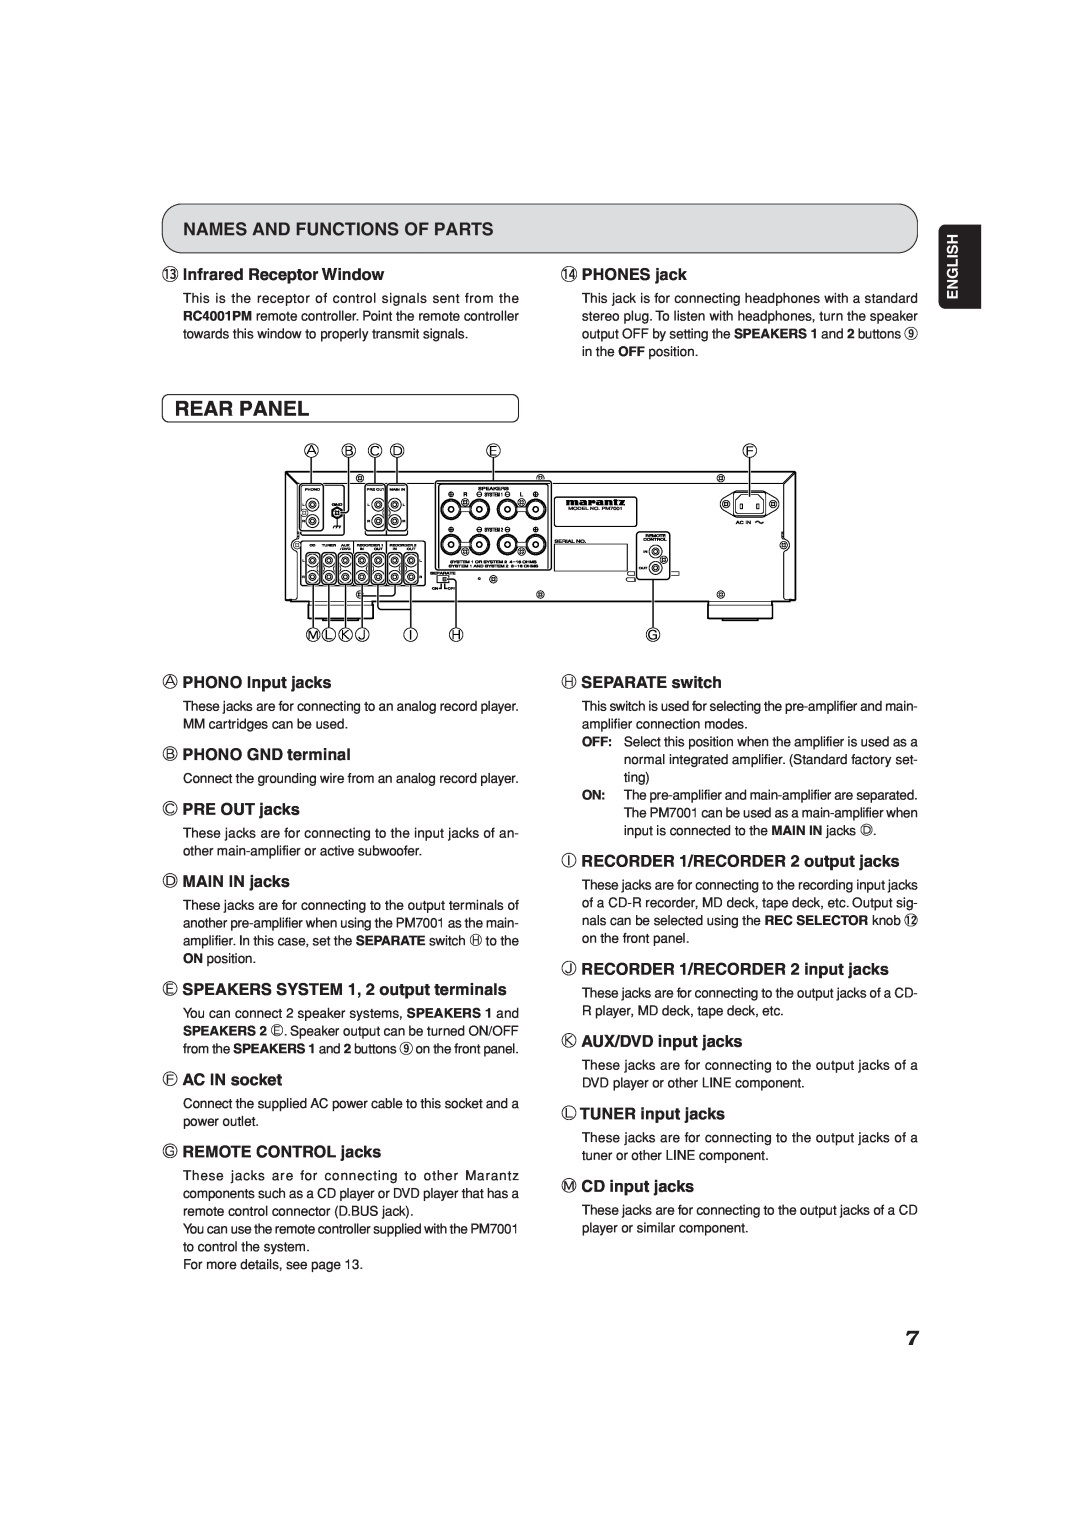 Marantz PM7001 manual Rear Panel, Names And Functions Of Parts 